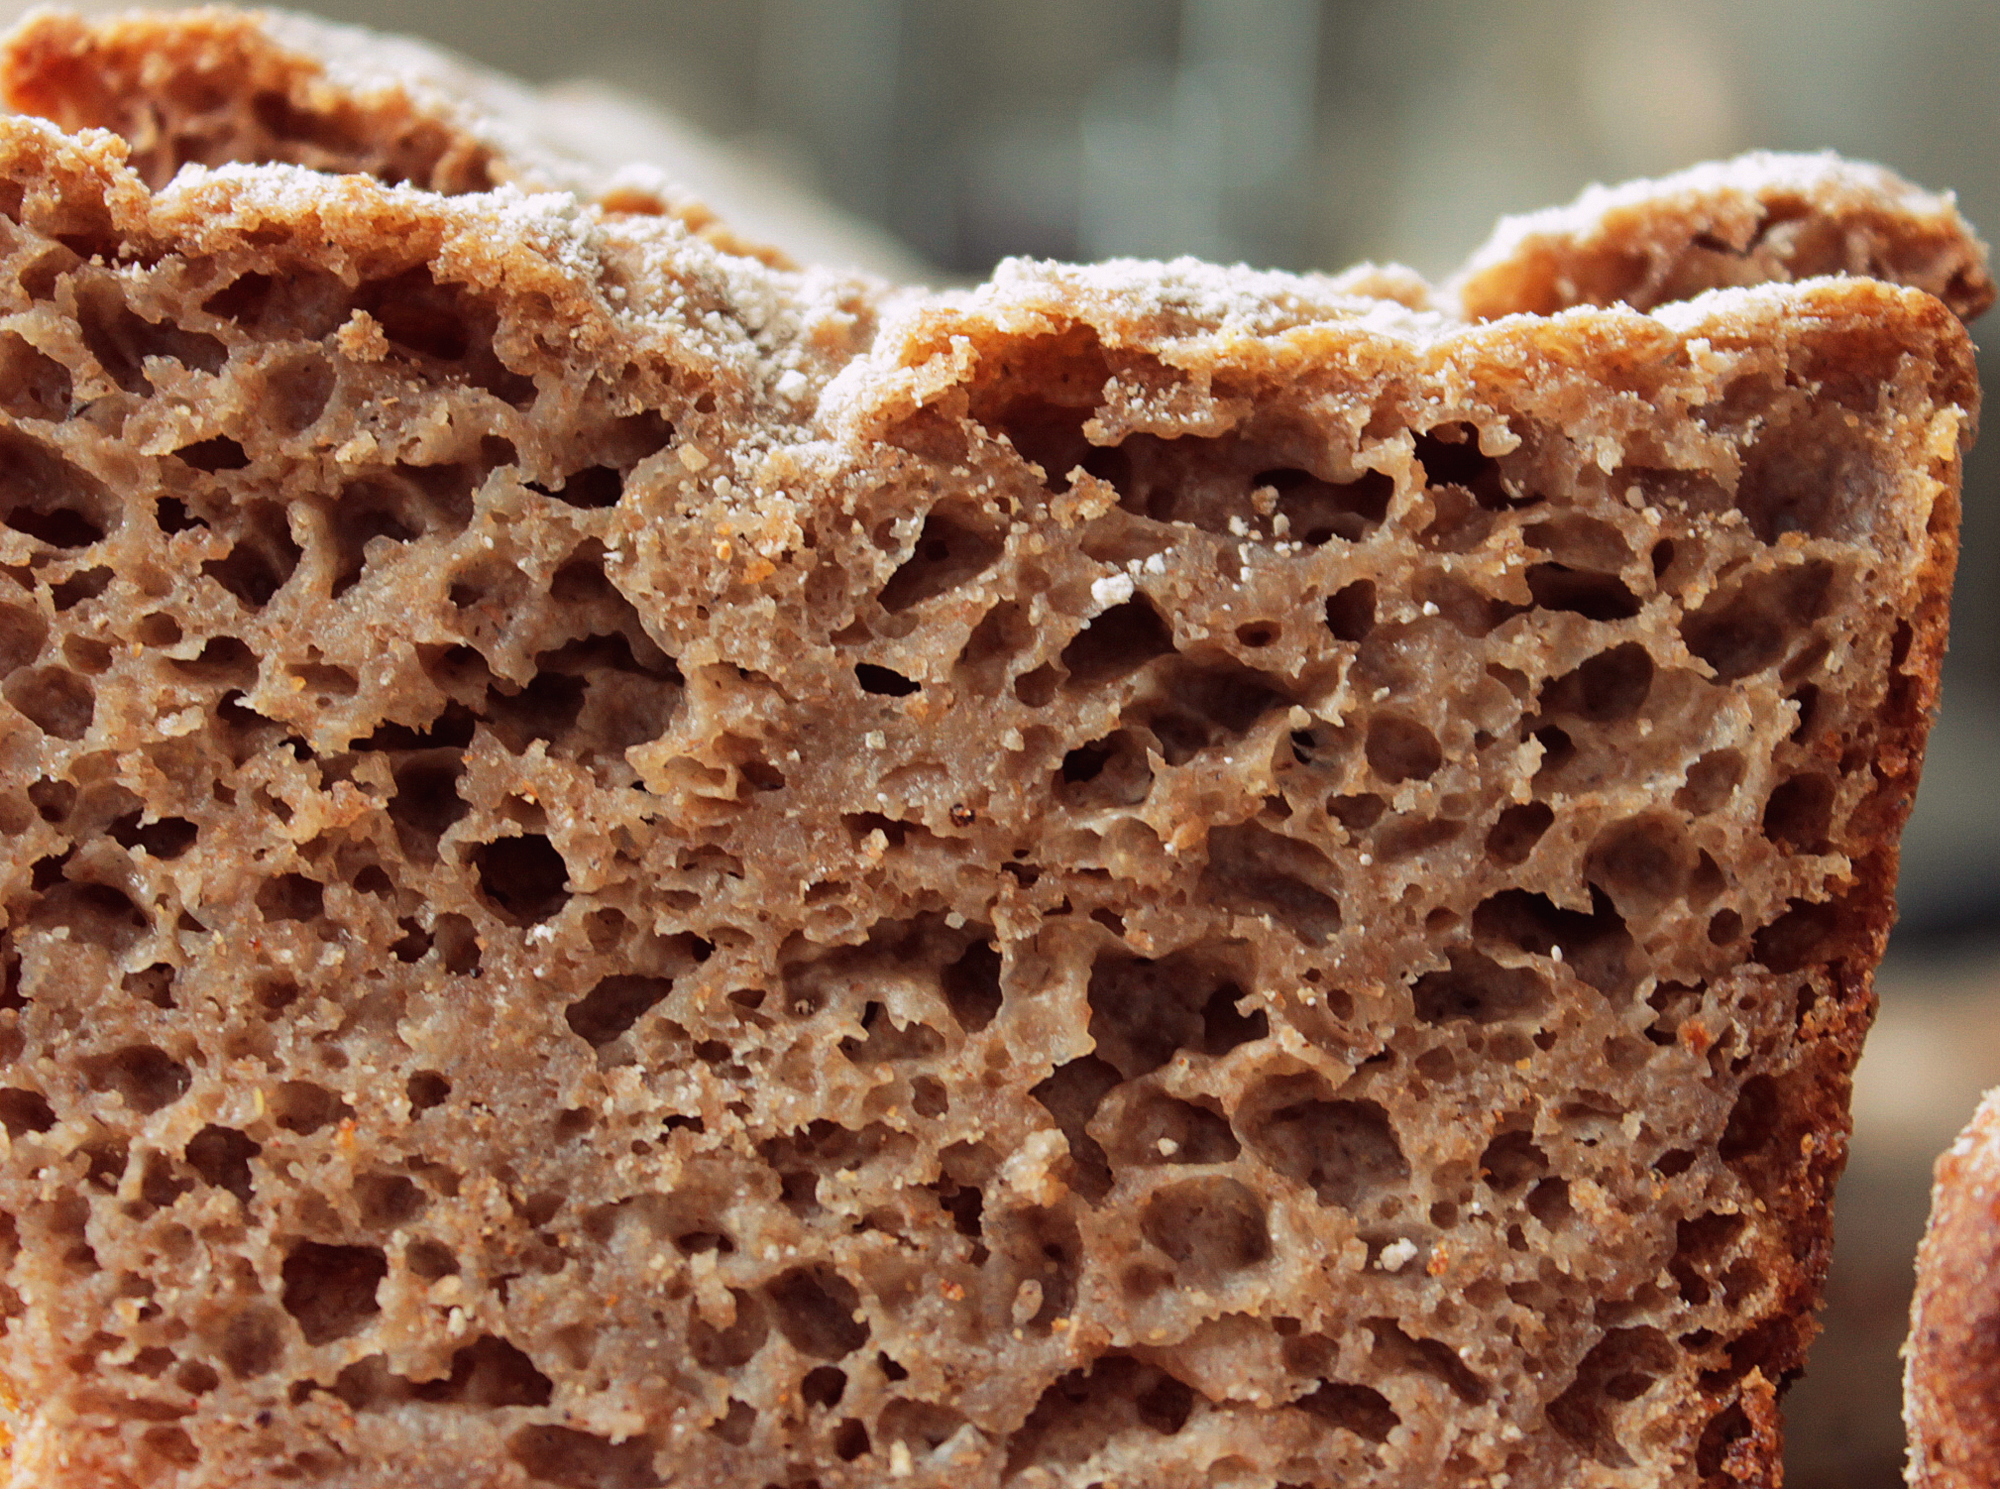 Introducing 100% RYE: Wheat-free, Fermented Rye Breads & Treats